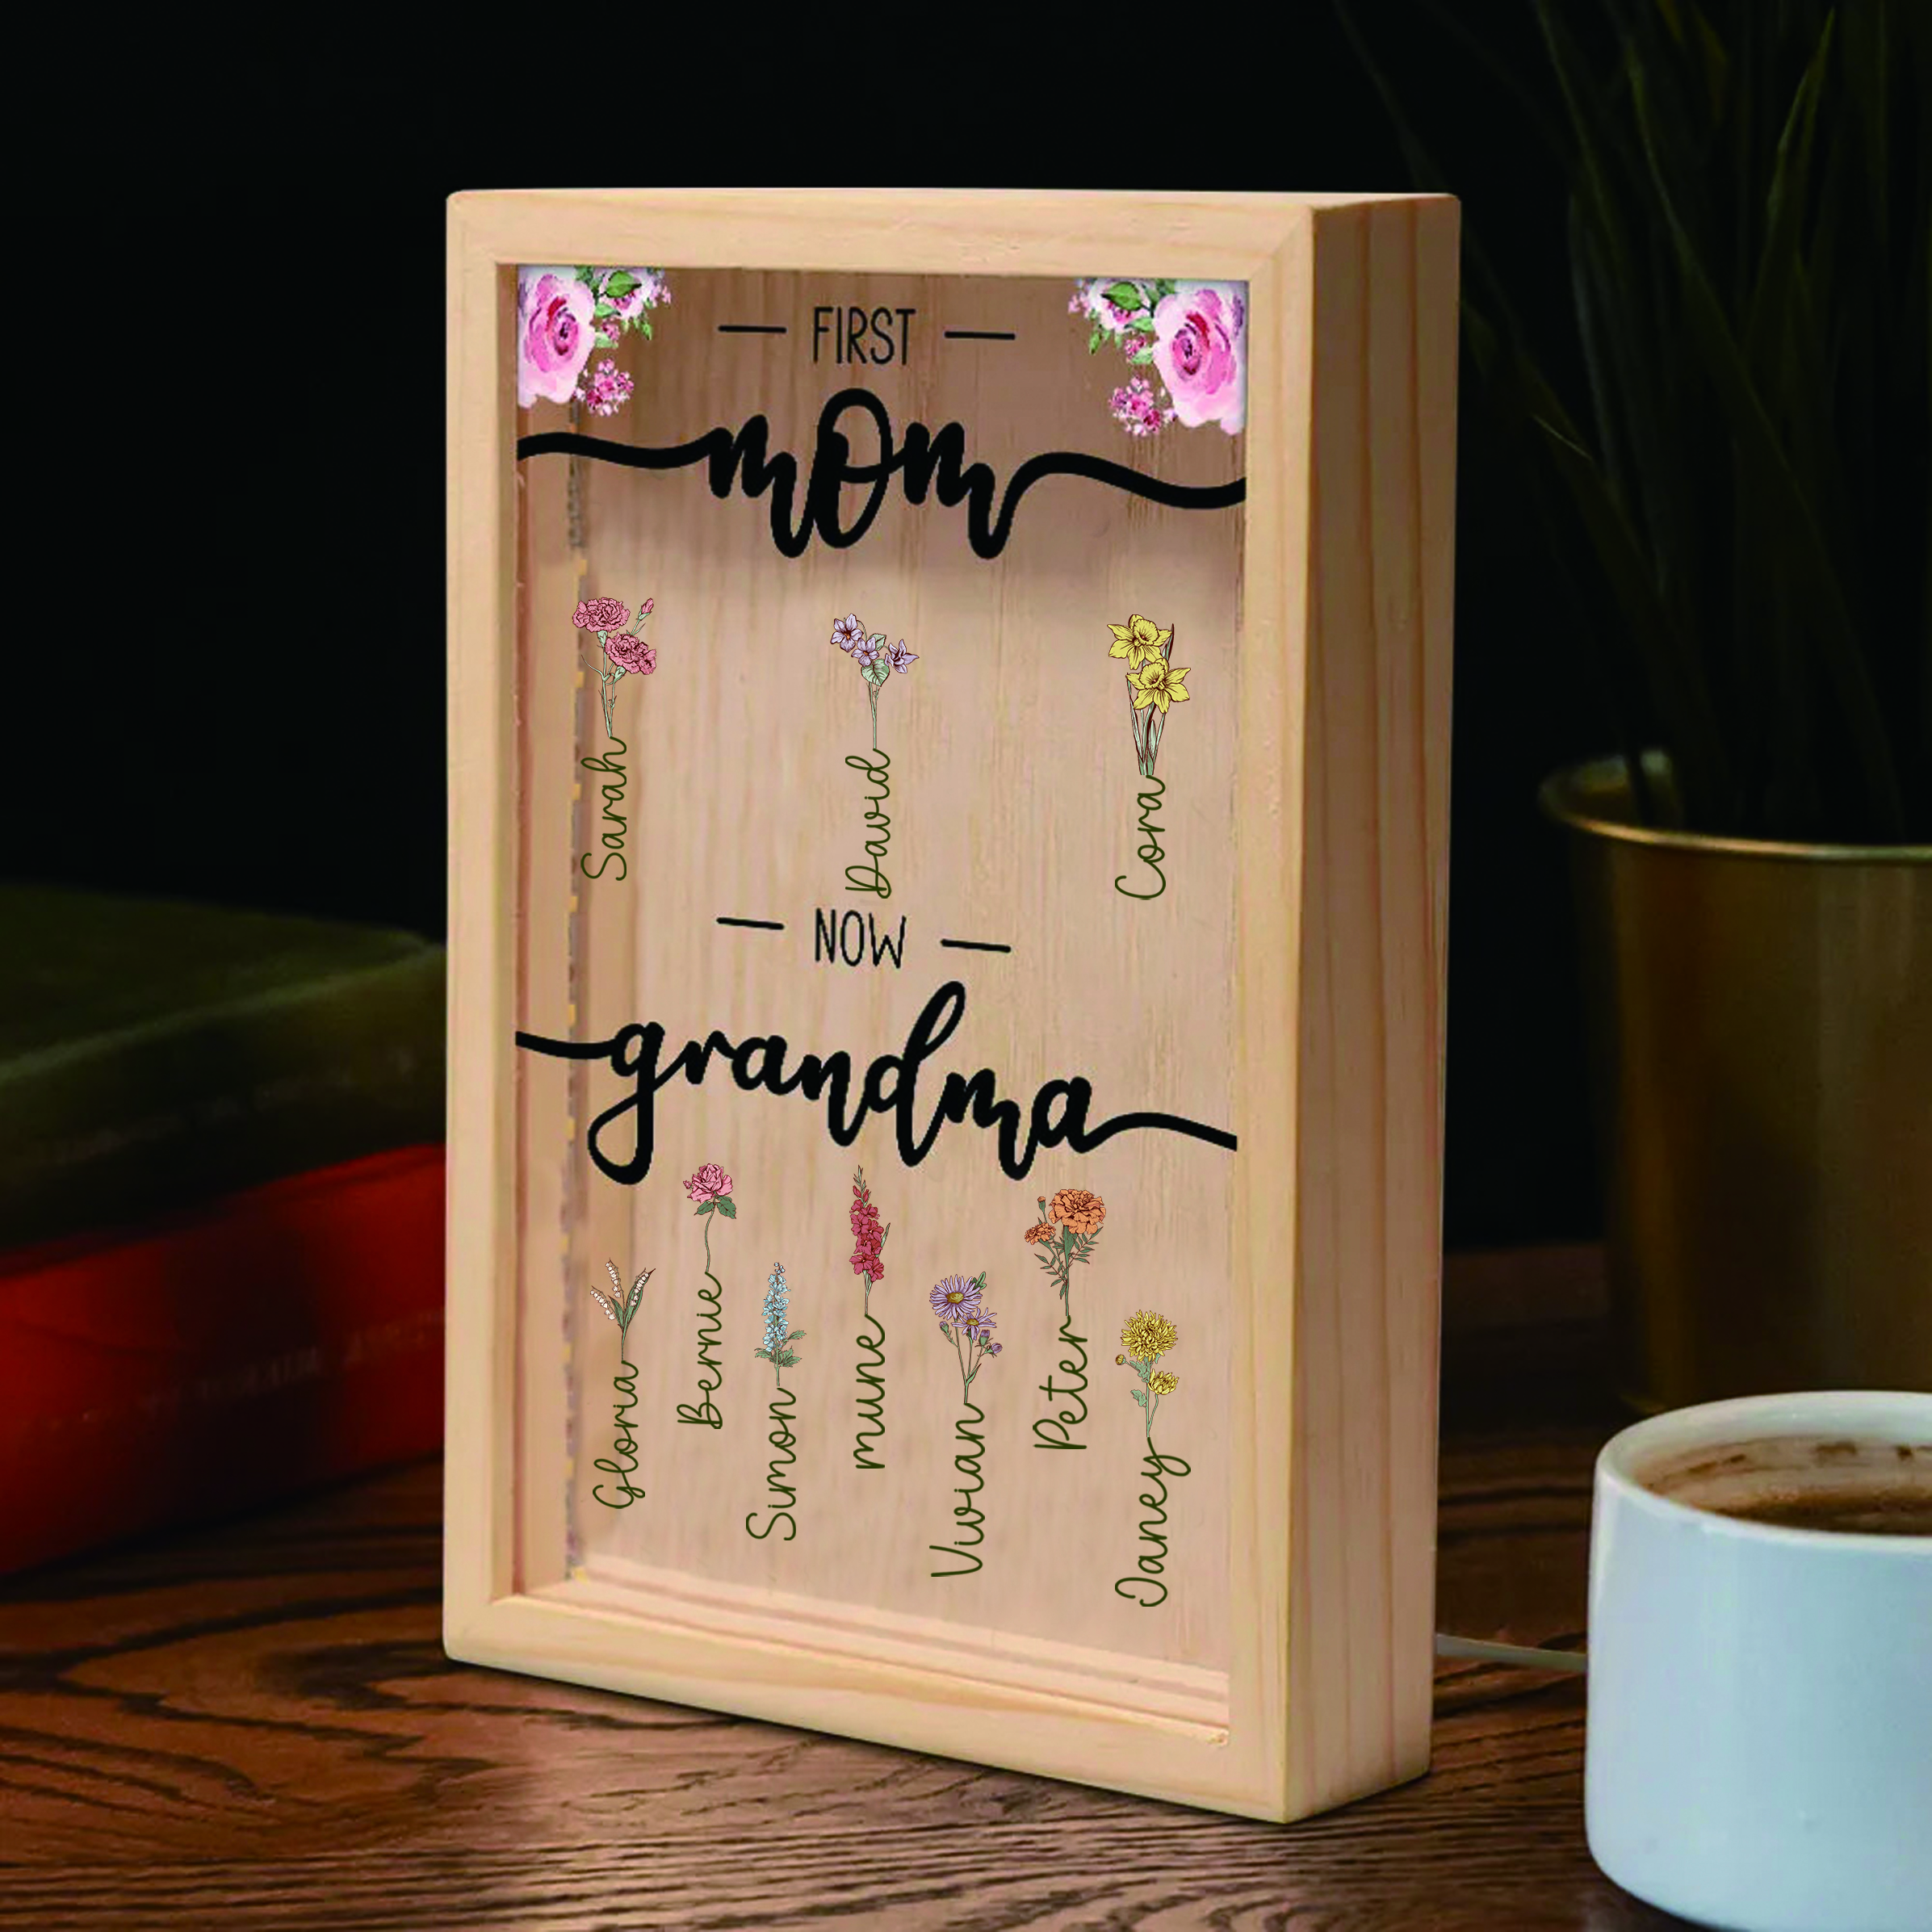 First Mom Now Grandma - Personalized Frame Light Box